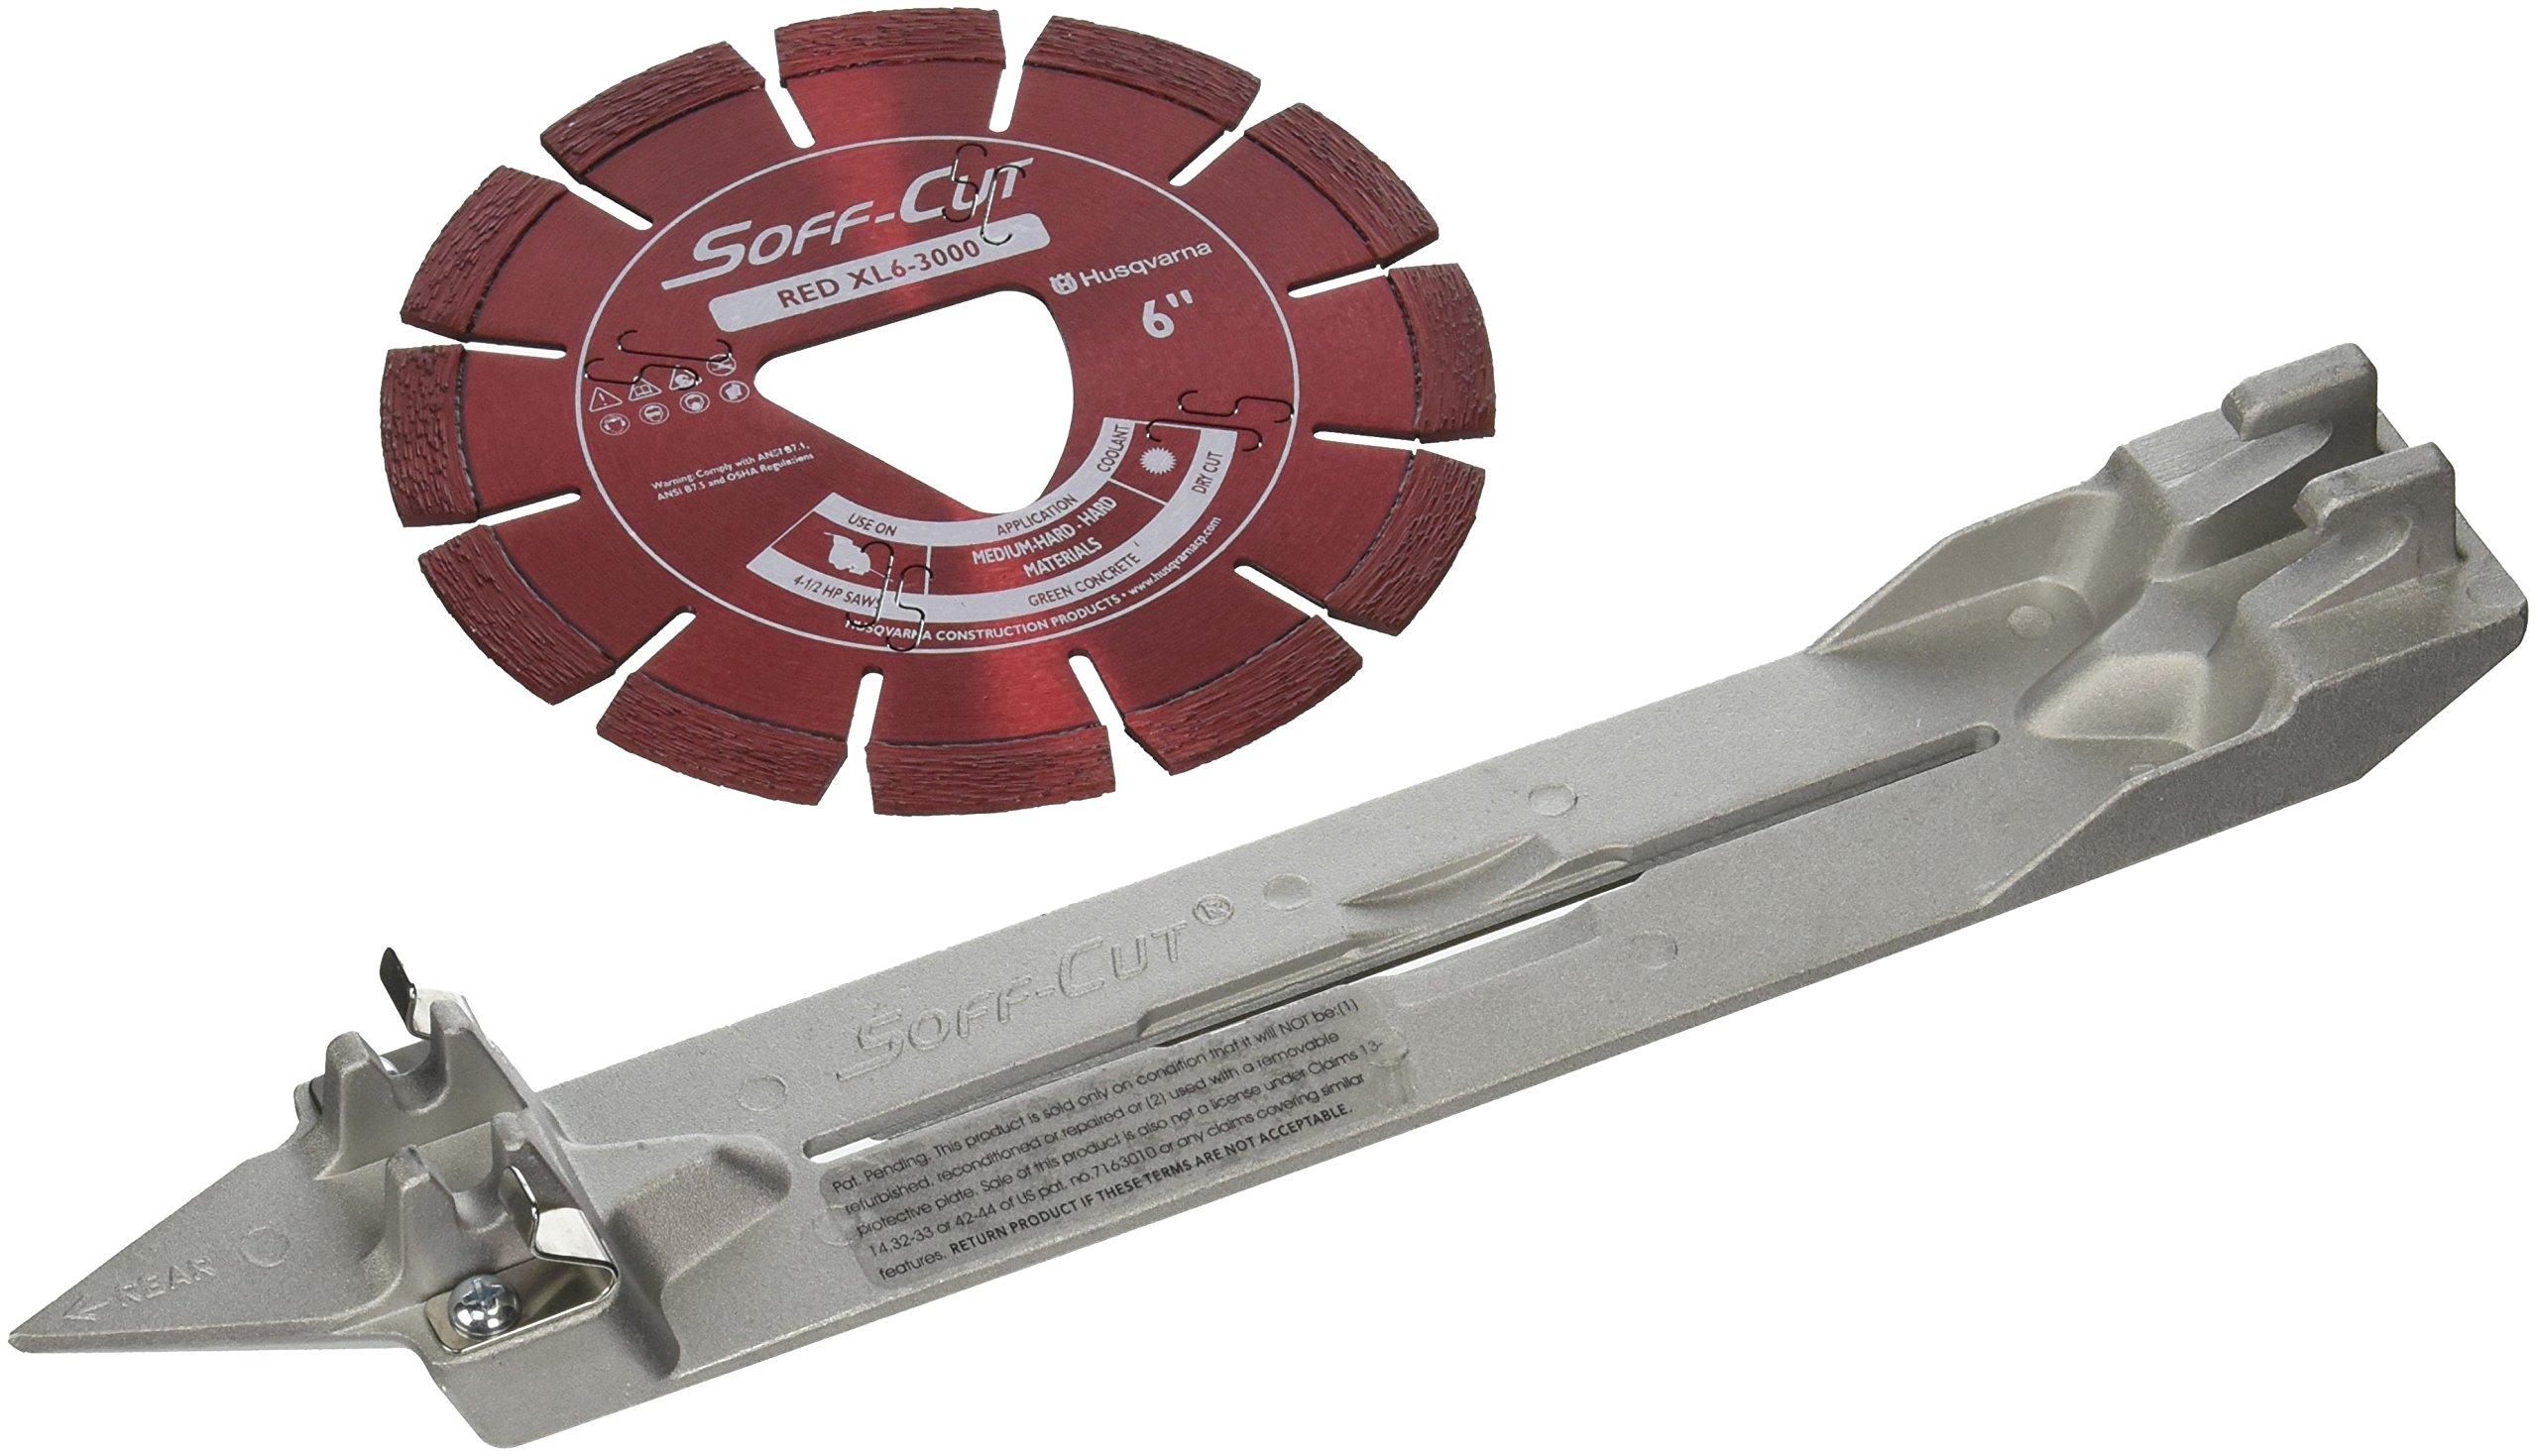 Husqvarna Construction Products 542777007 XL6 3000 Soff Cut Ultra Early Entry Diamond Blade